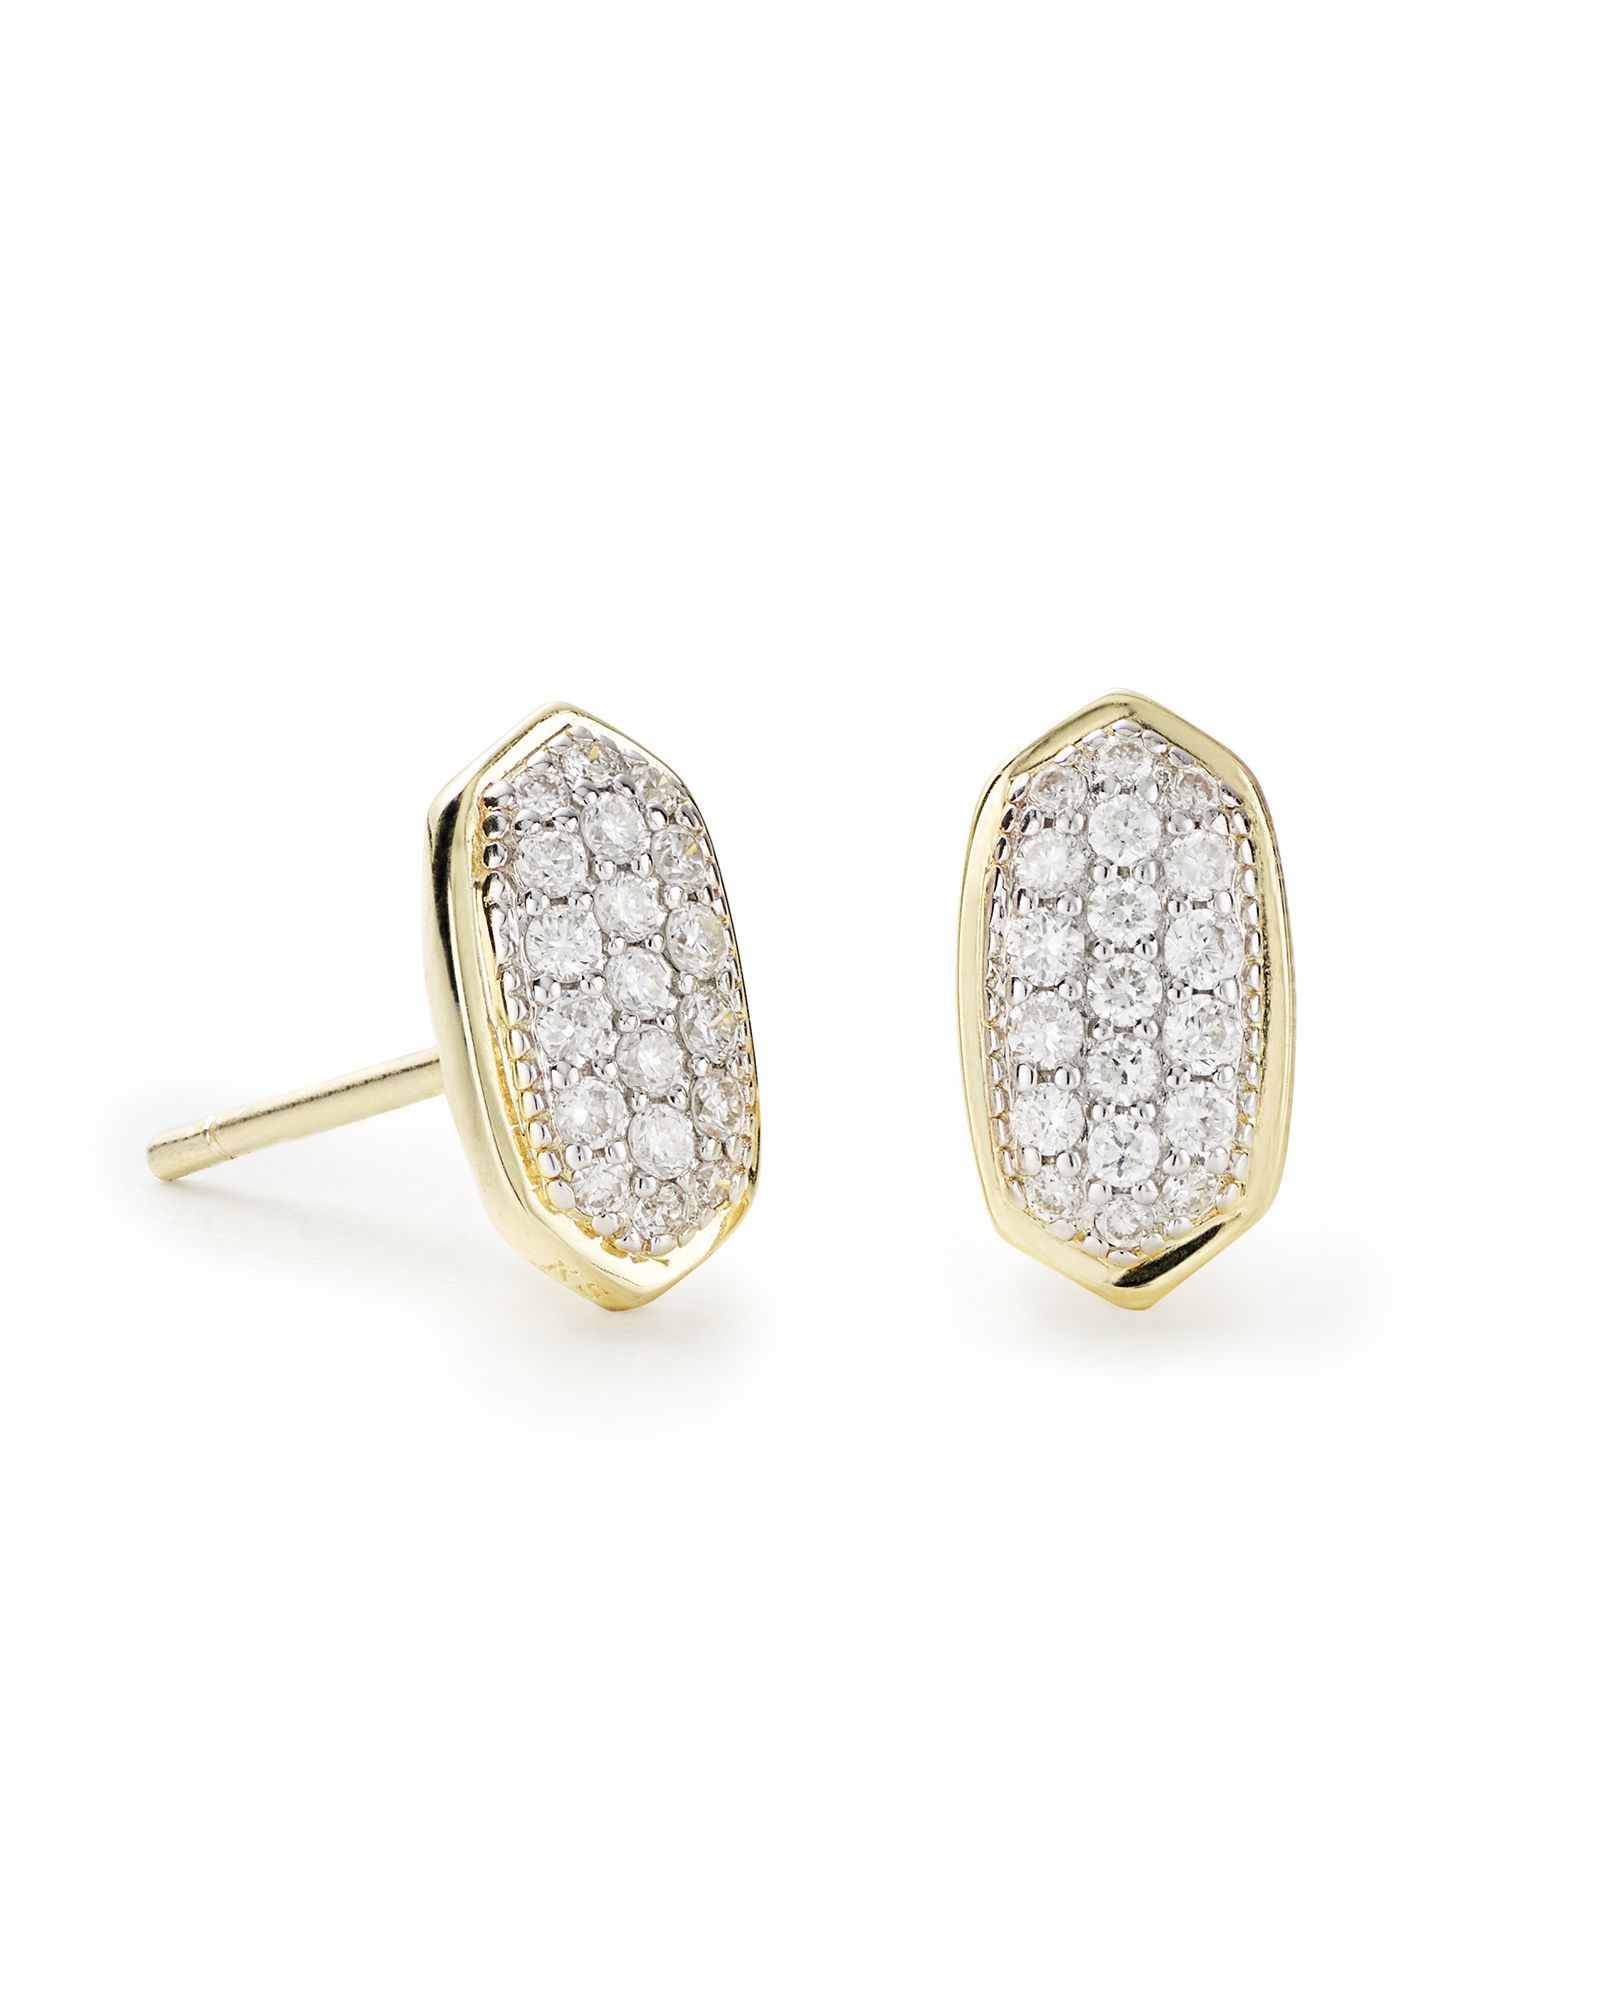 Amelee Earrings Pave Diamond and 14k Gold | Kendra Scott | Kendra Scott